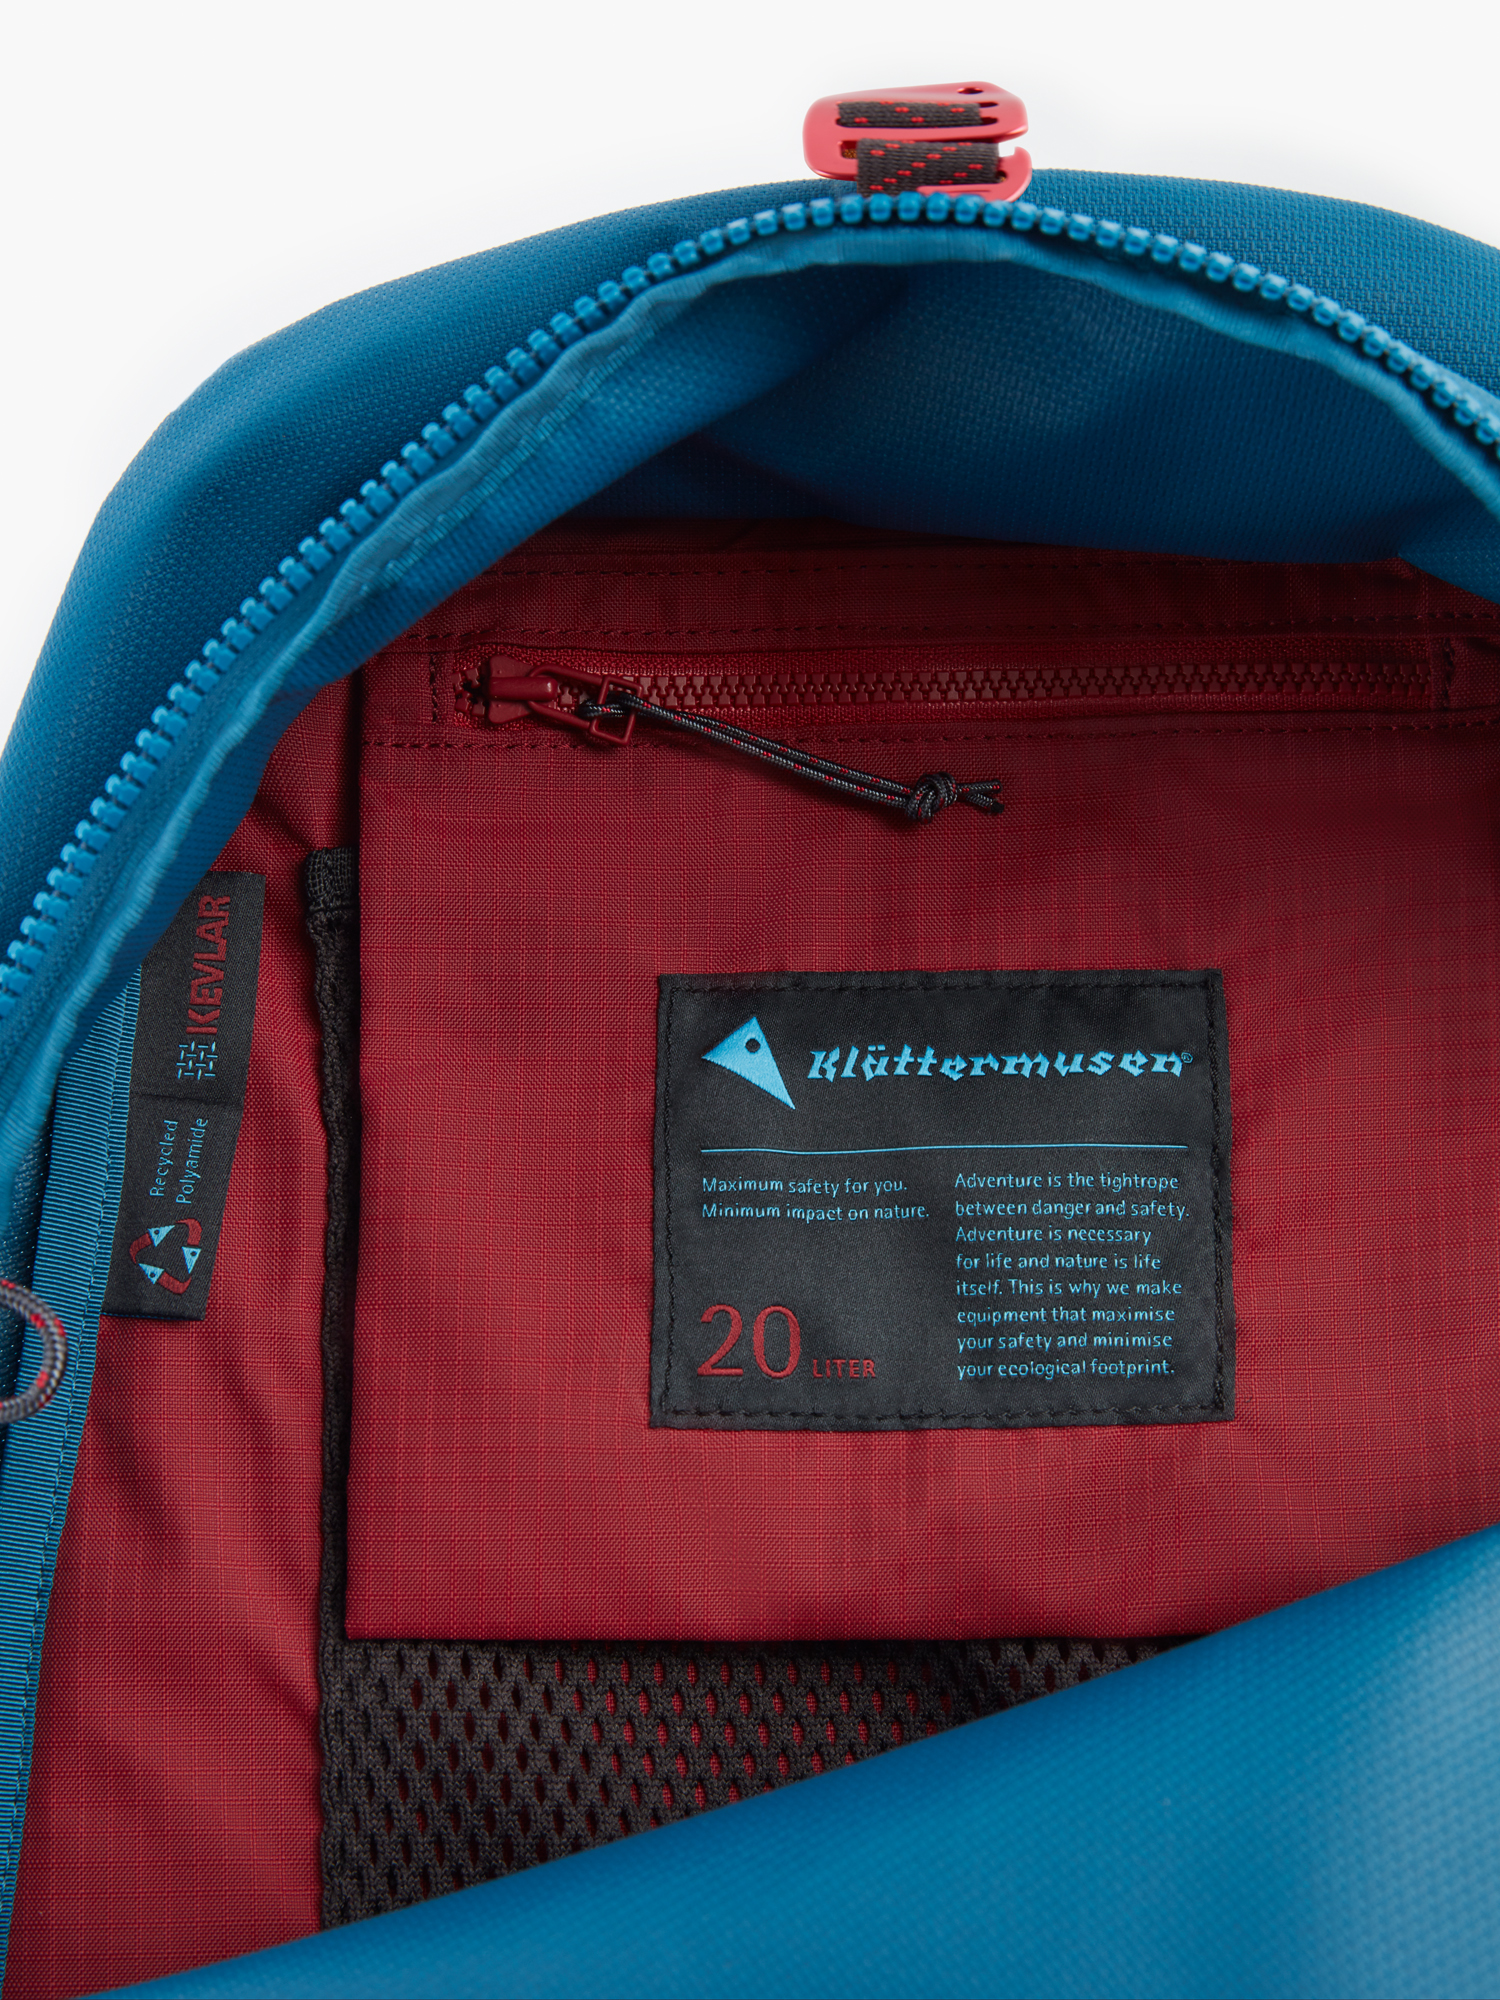 40384U91 - Bure Backpack 15L - Blue Sapphire